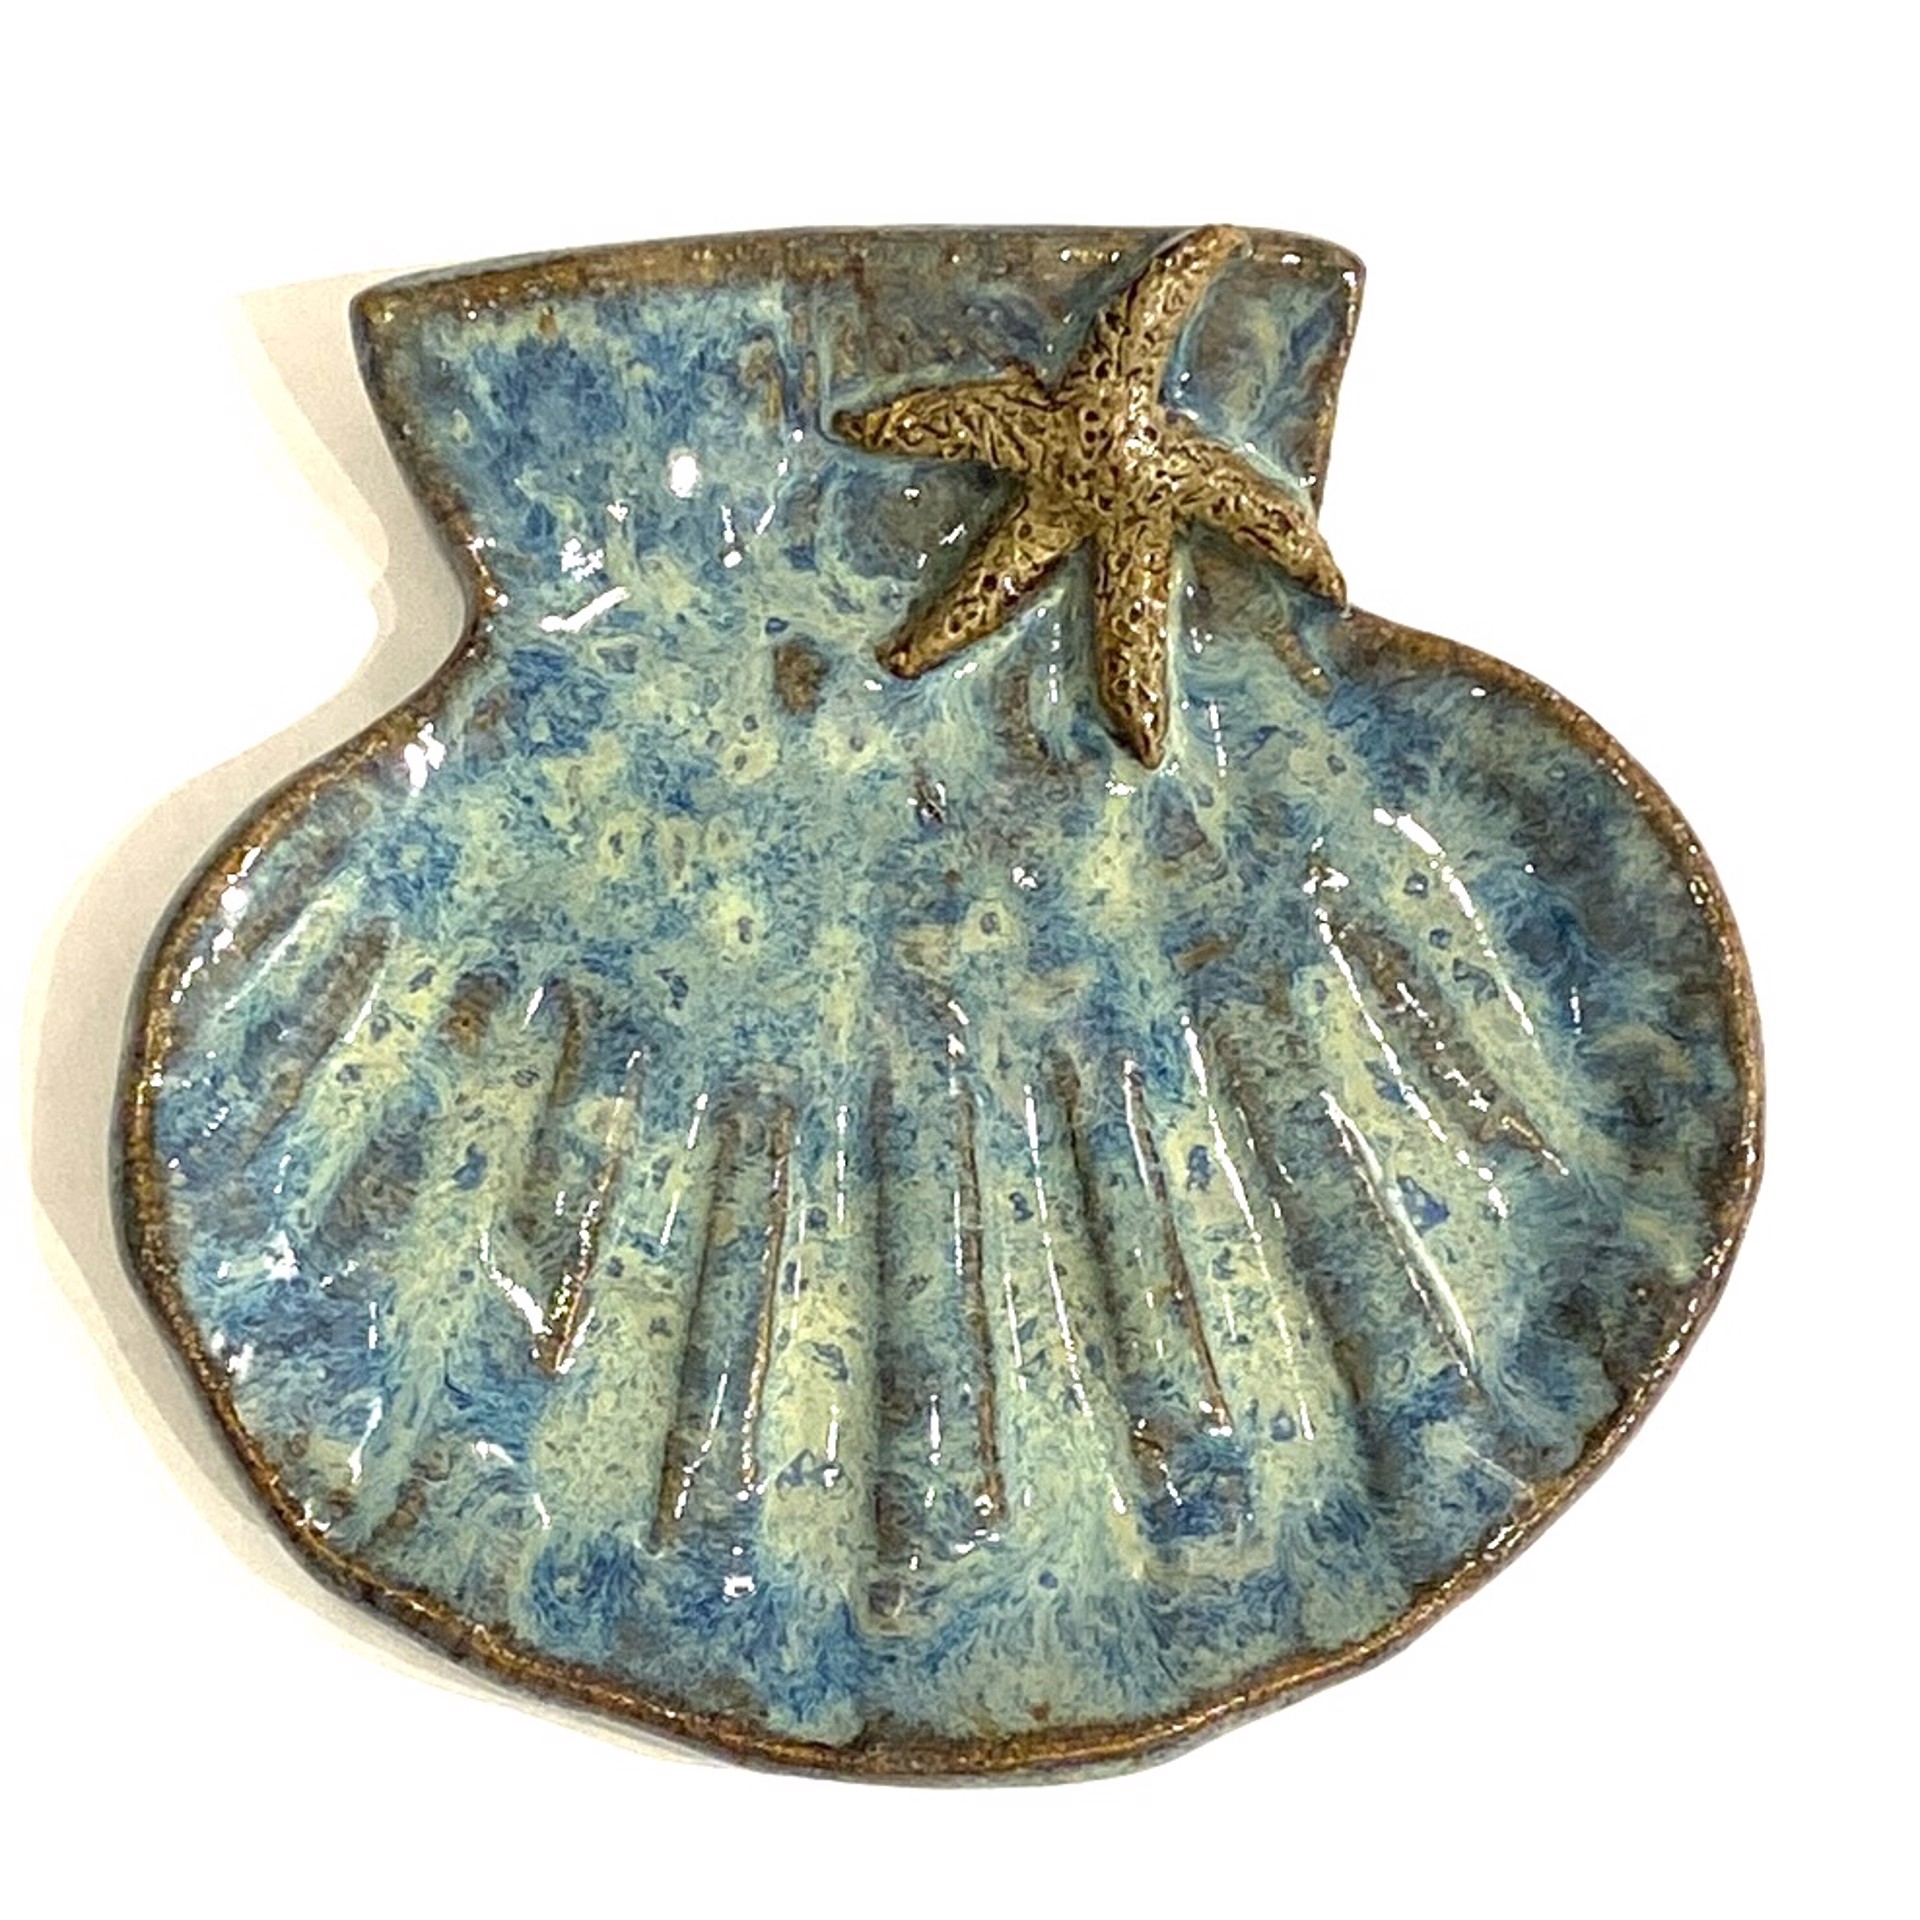 Shell Dish with Starfish (Blue Glaze) LG23-1047 by Jim & Steffi Logan